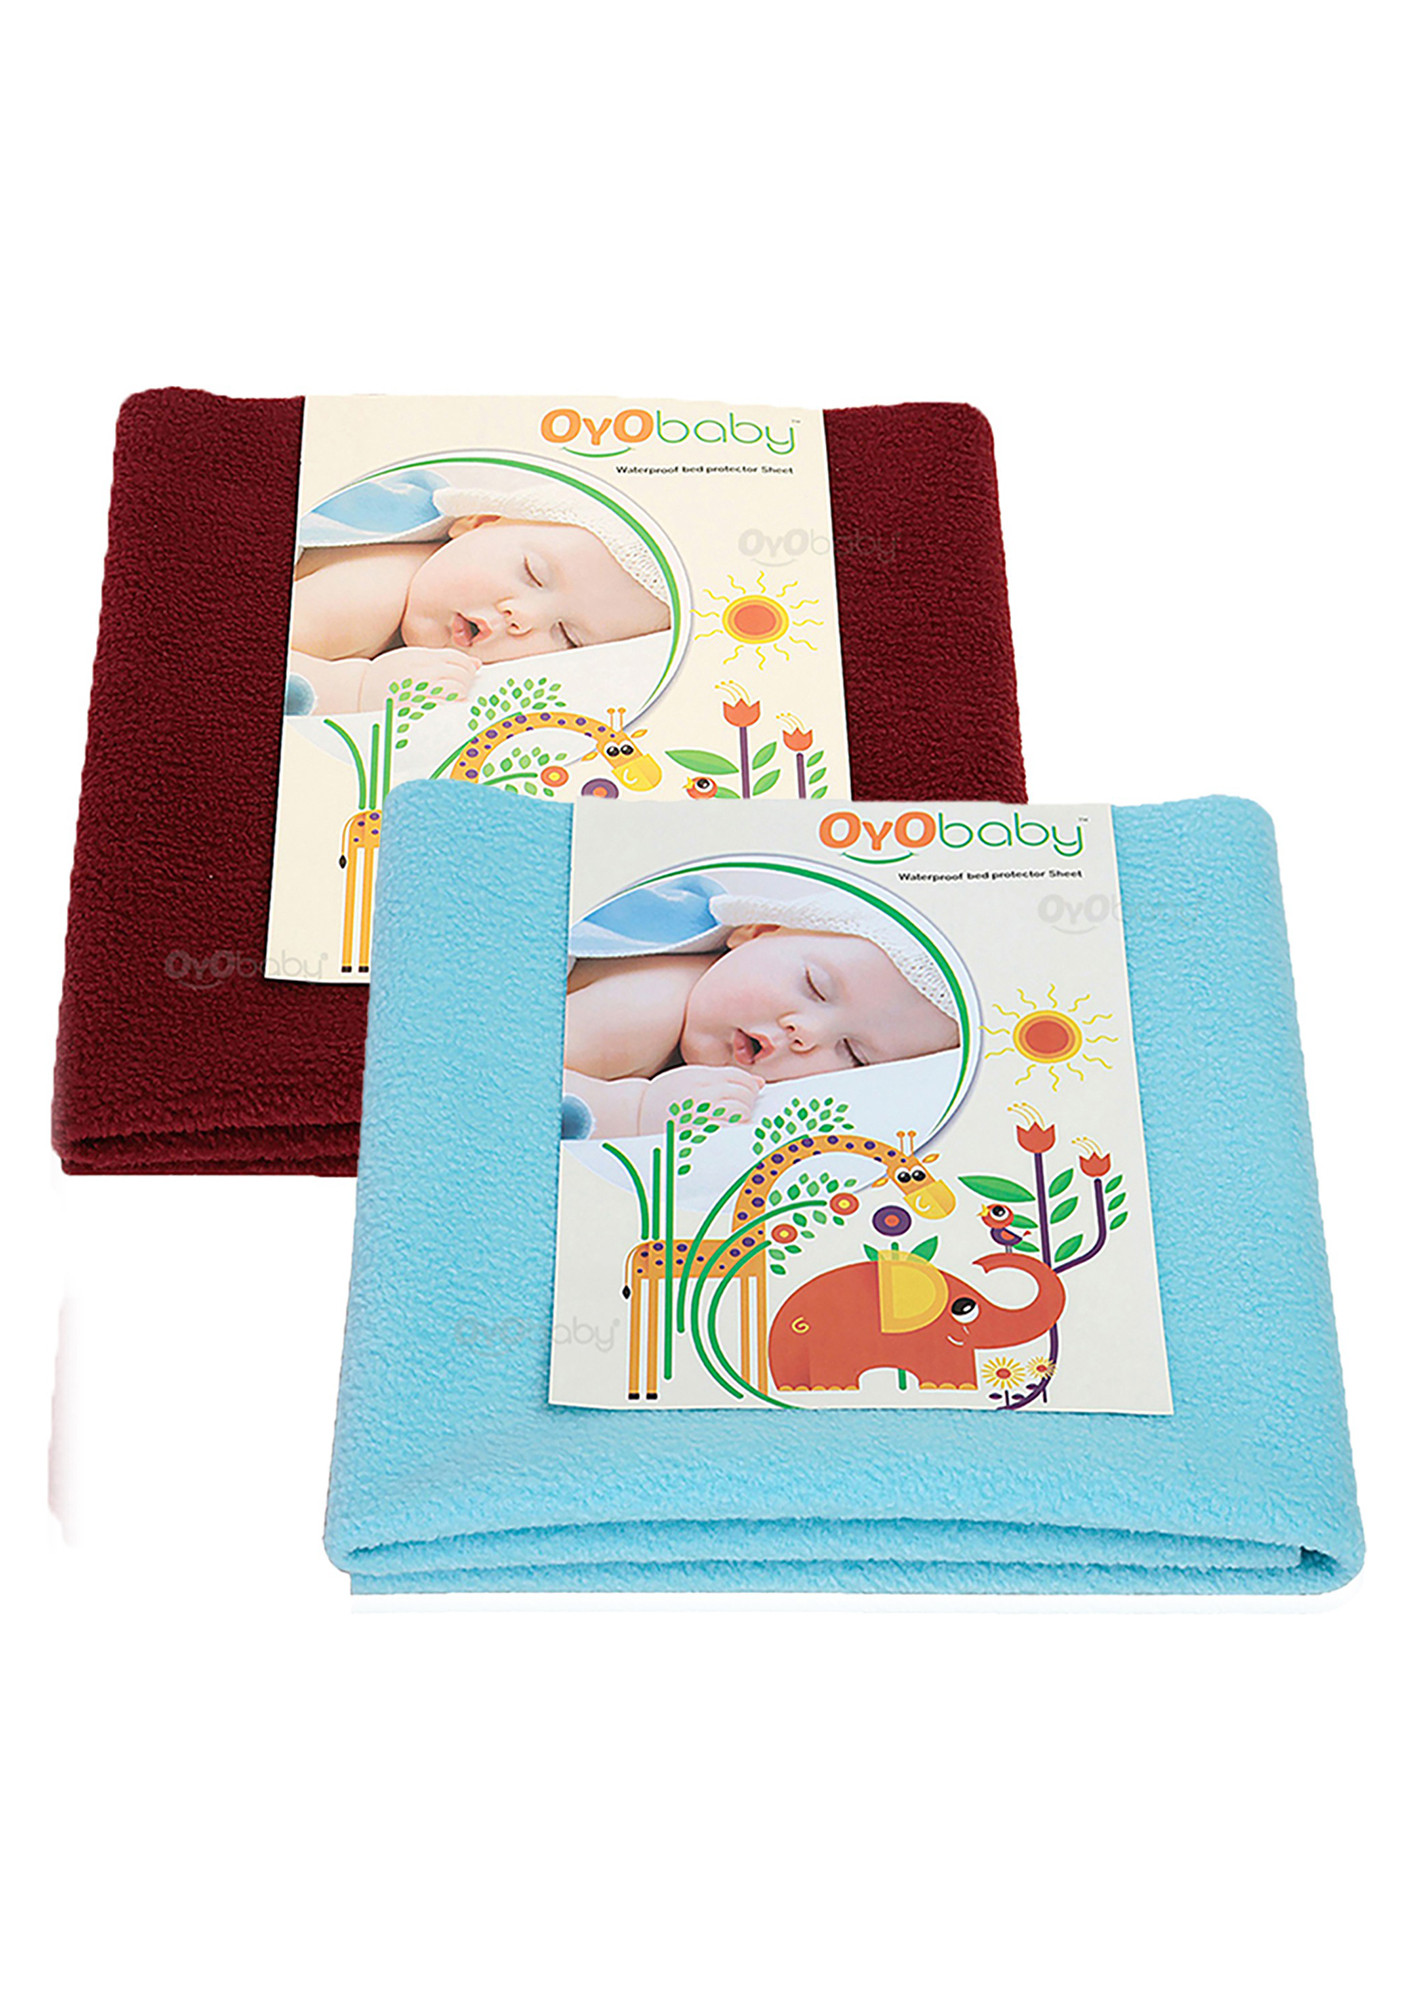 OYO Baby Dry sheet Waterproof Baby Bed Protector /Reusable mat/ Waterproof  Baby Dry Sheet/ Baby Mats/